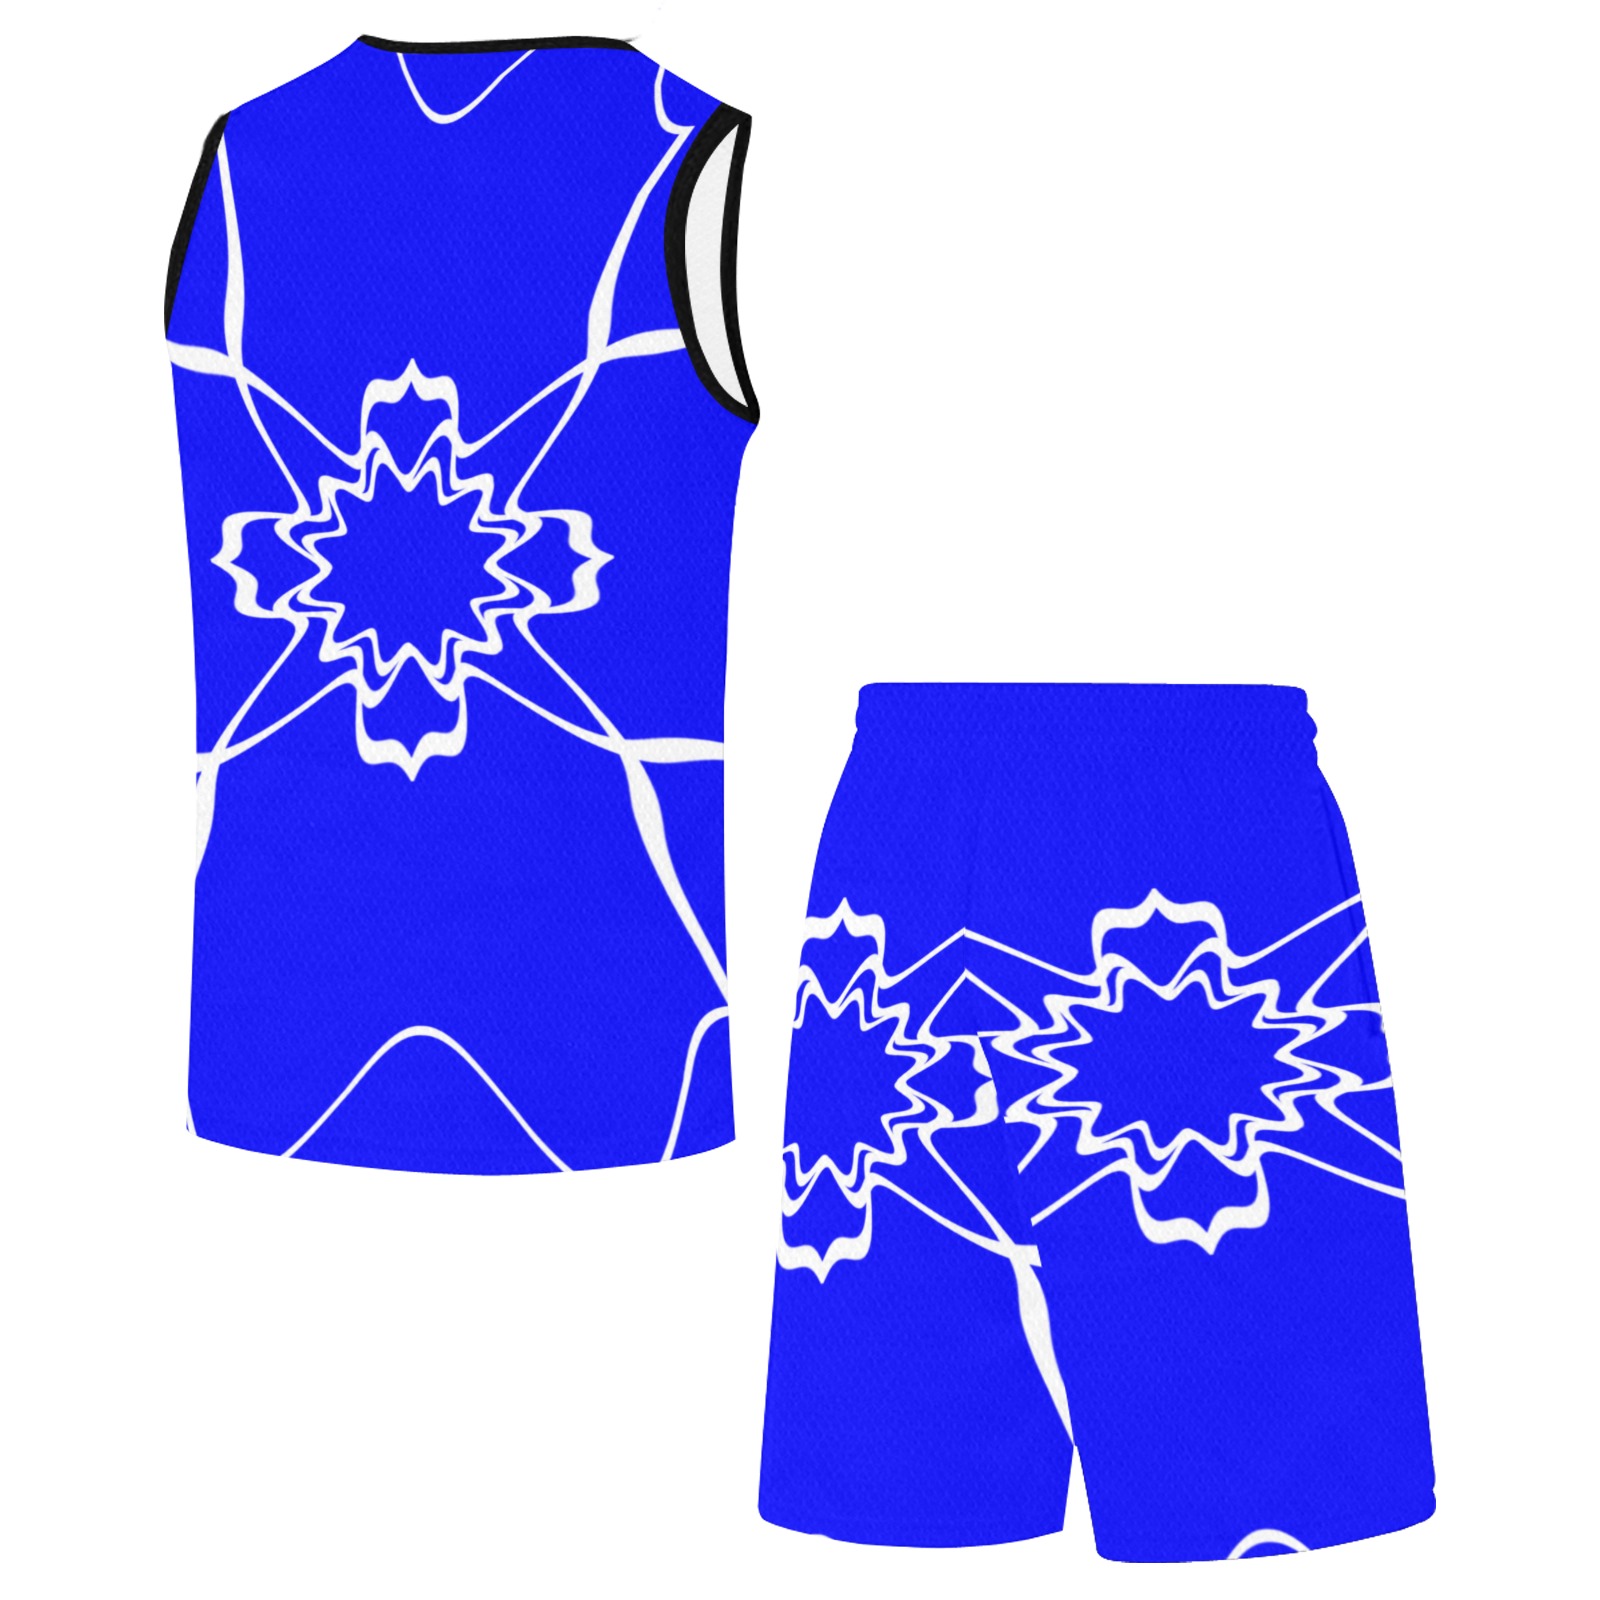 White Interlocking Triangles2 Starred blue Basketball Uniform with Pocket